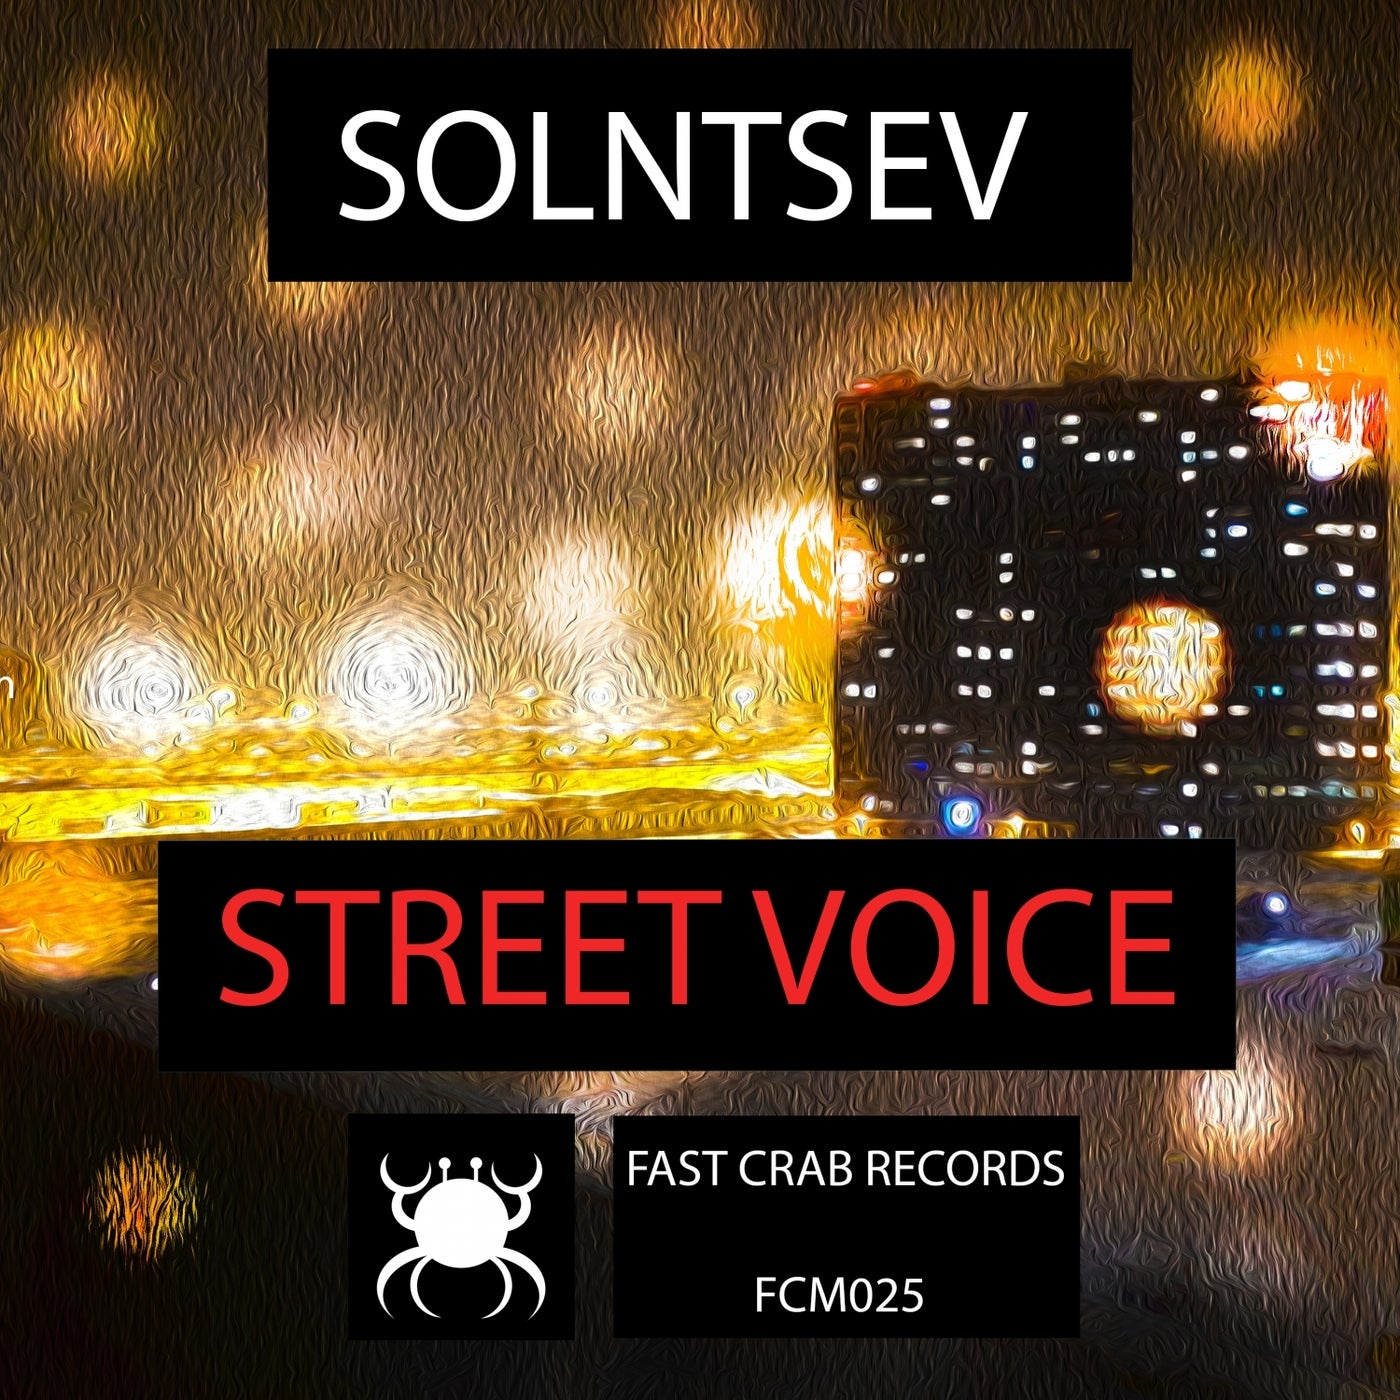 Street Voice